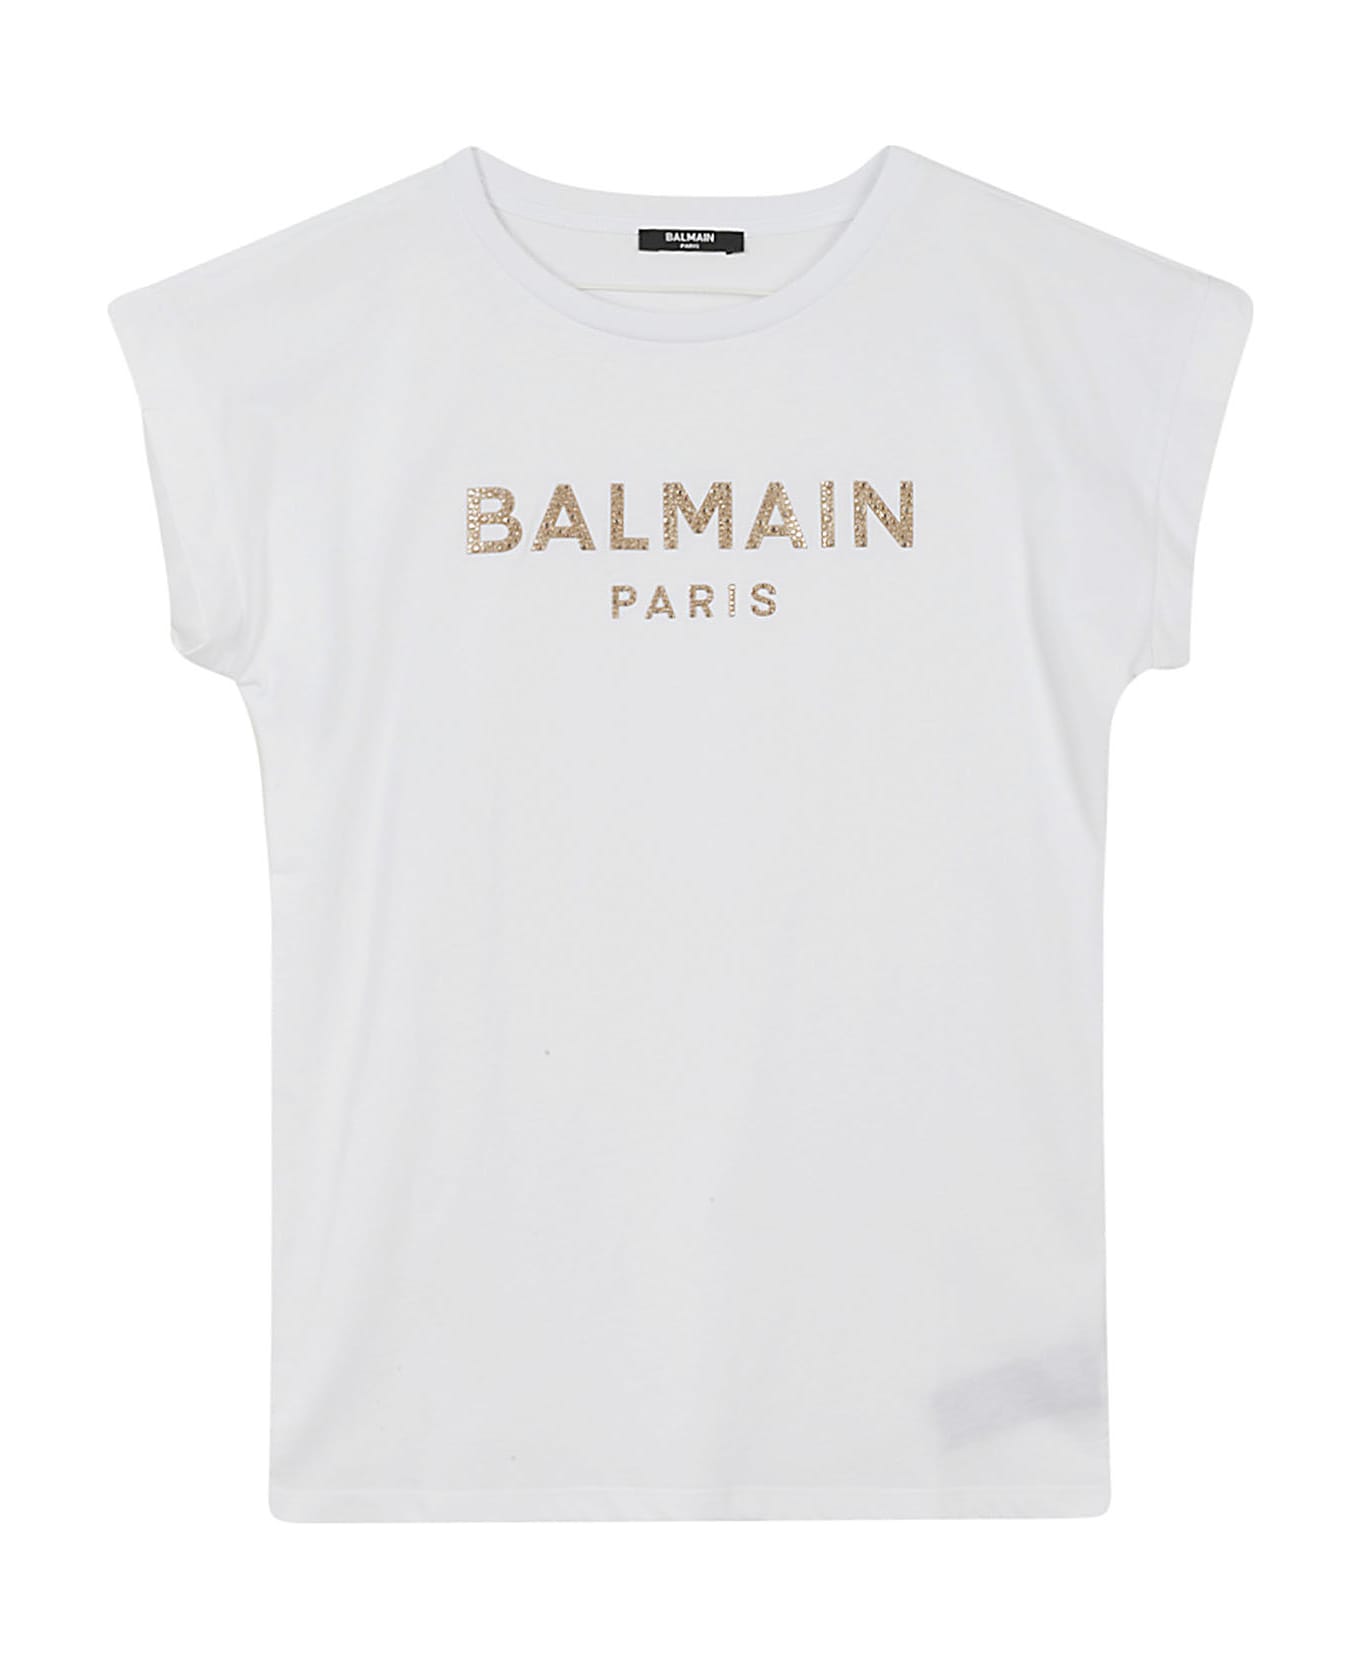 Balmain T Shirt - Or White Gold